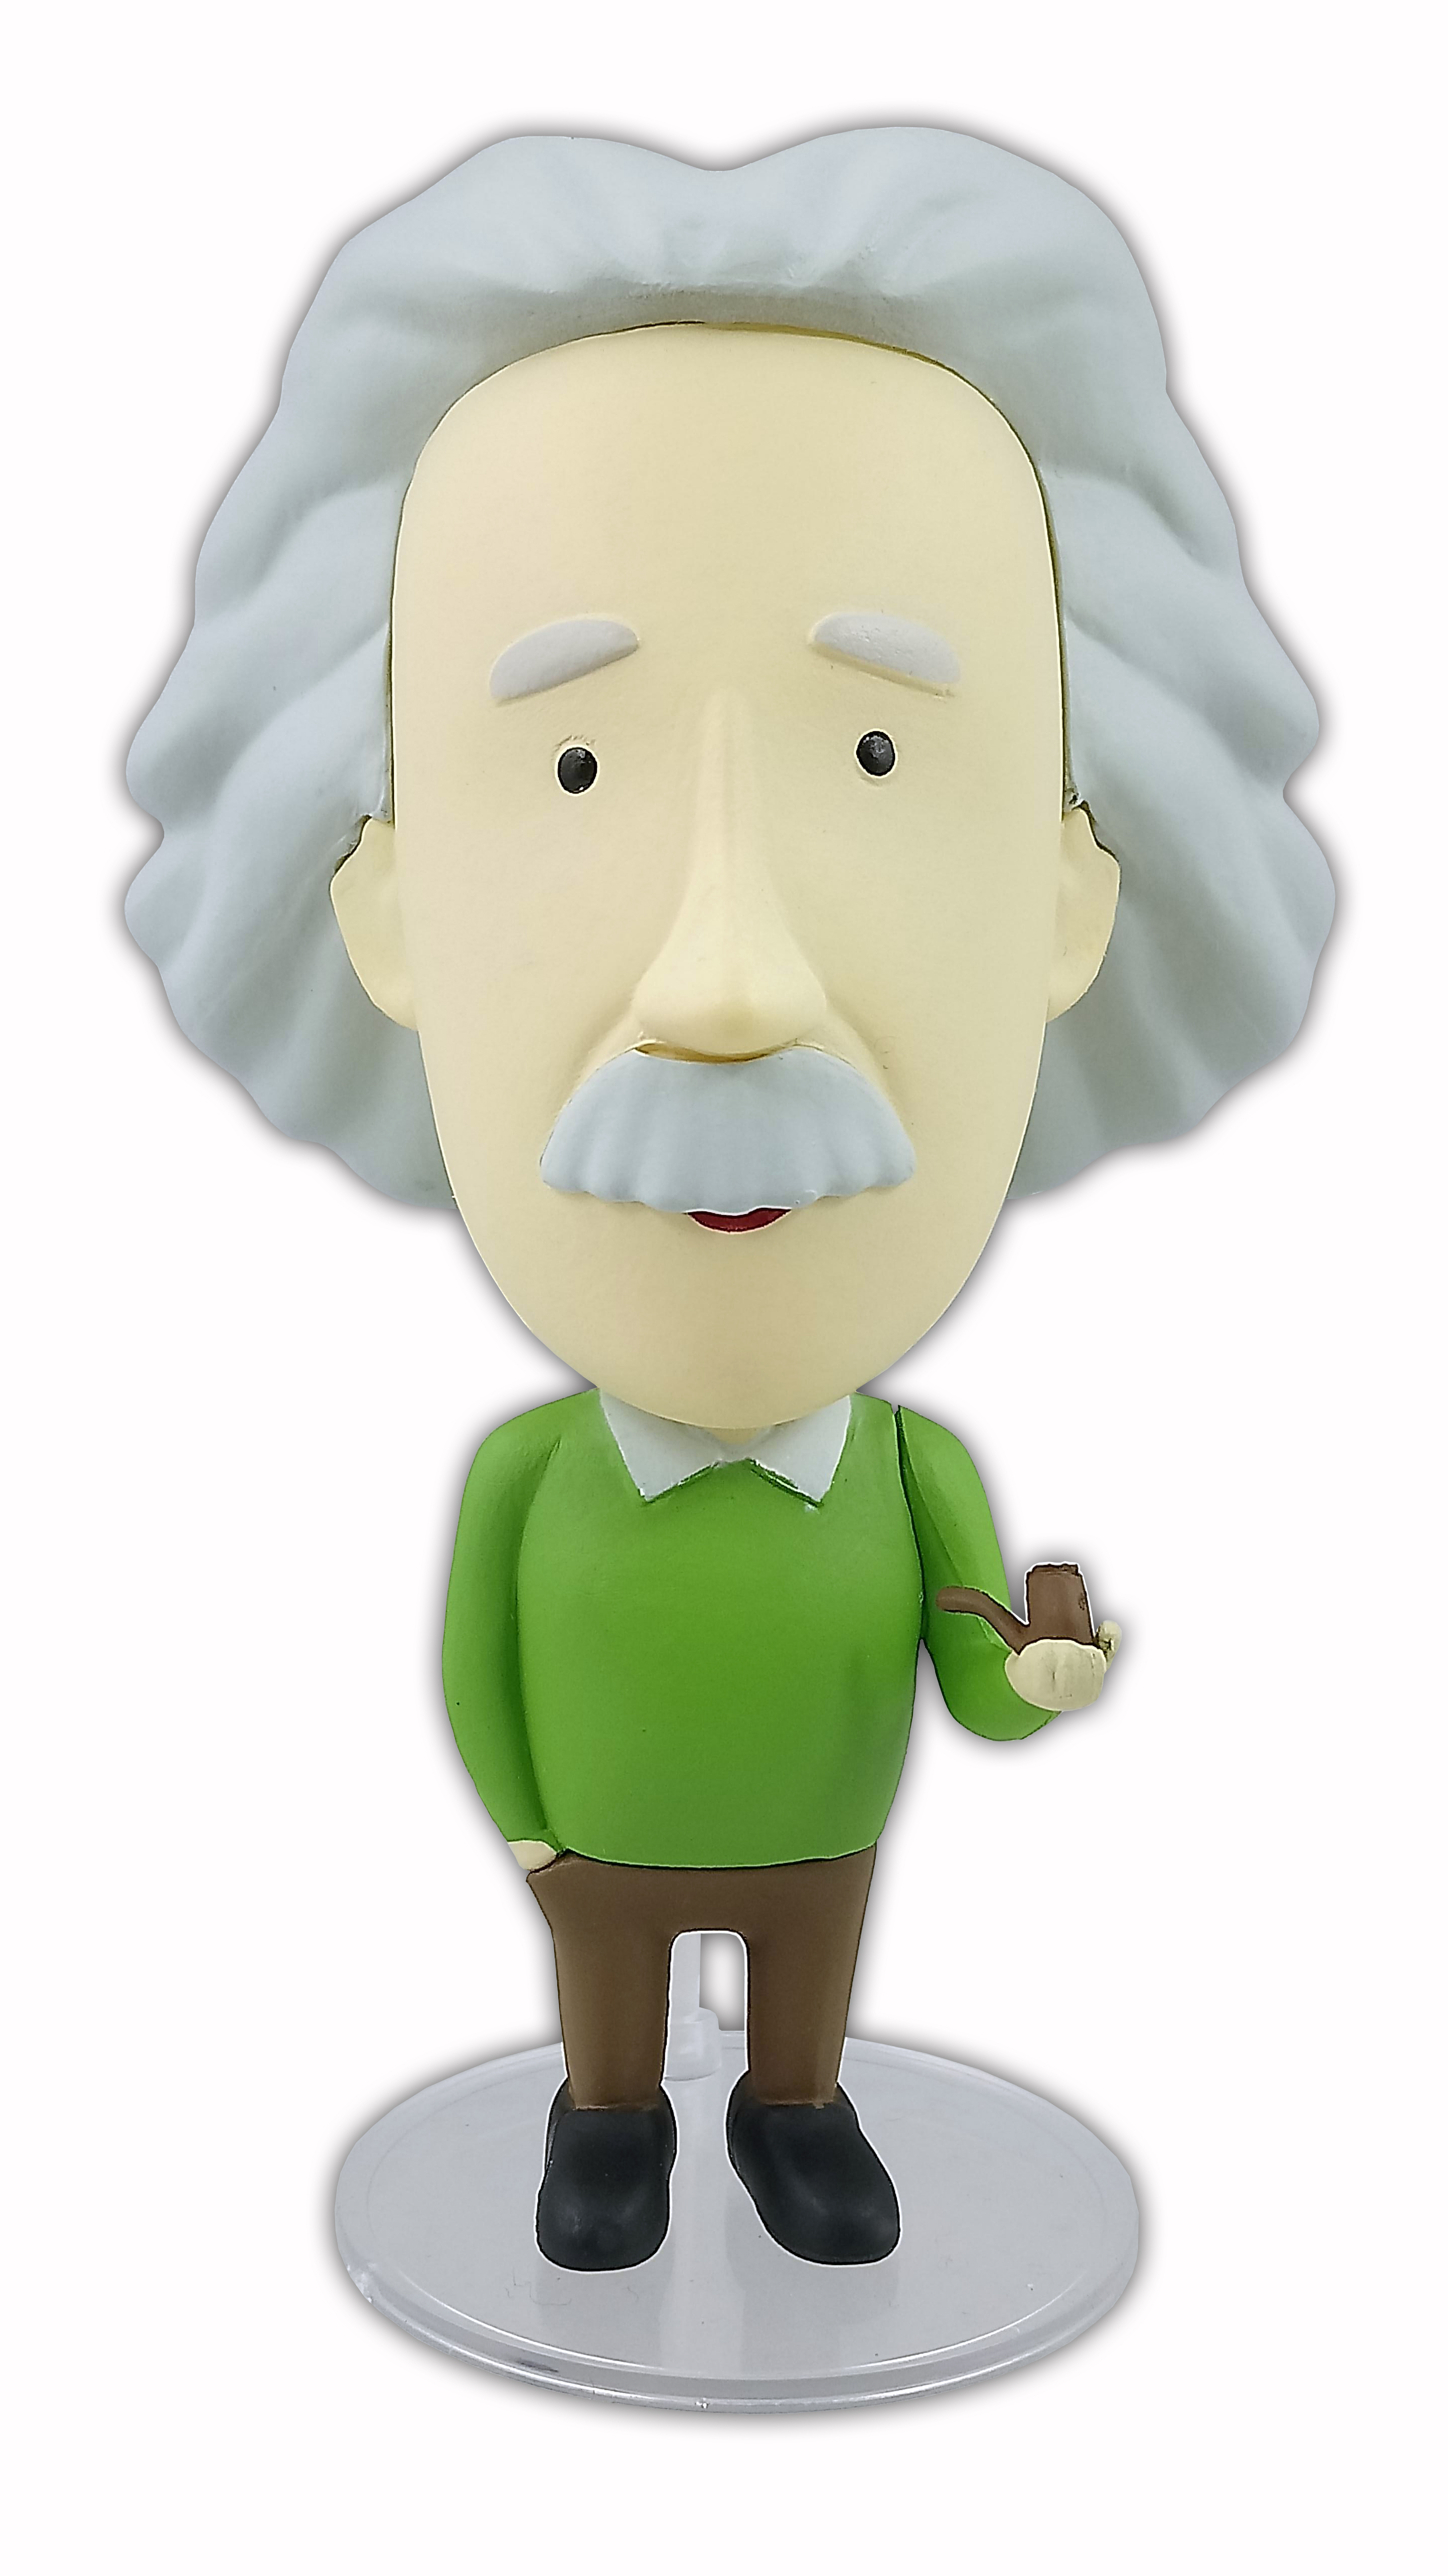 ExploraStore product of an Albert Einstein Figurine